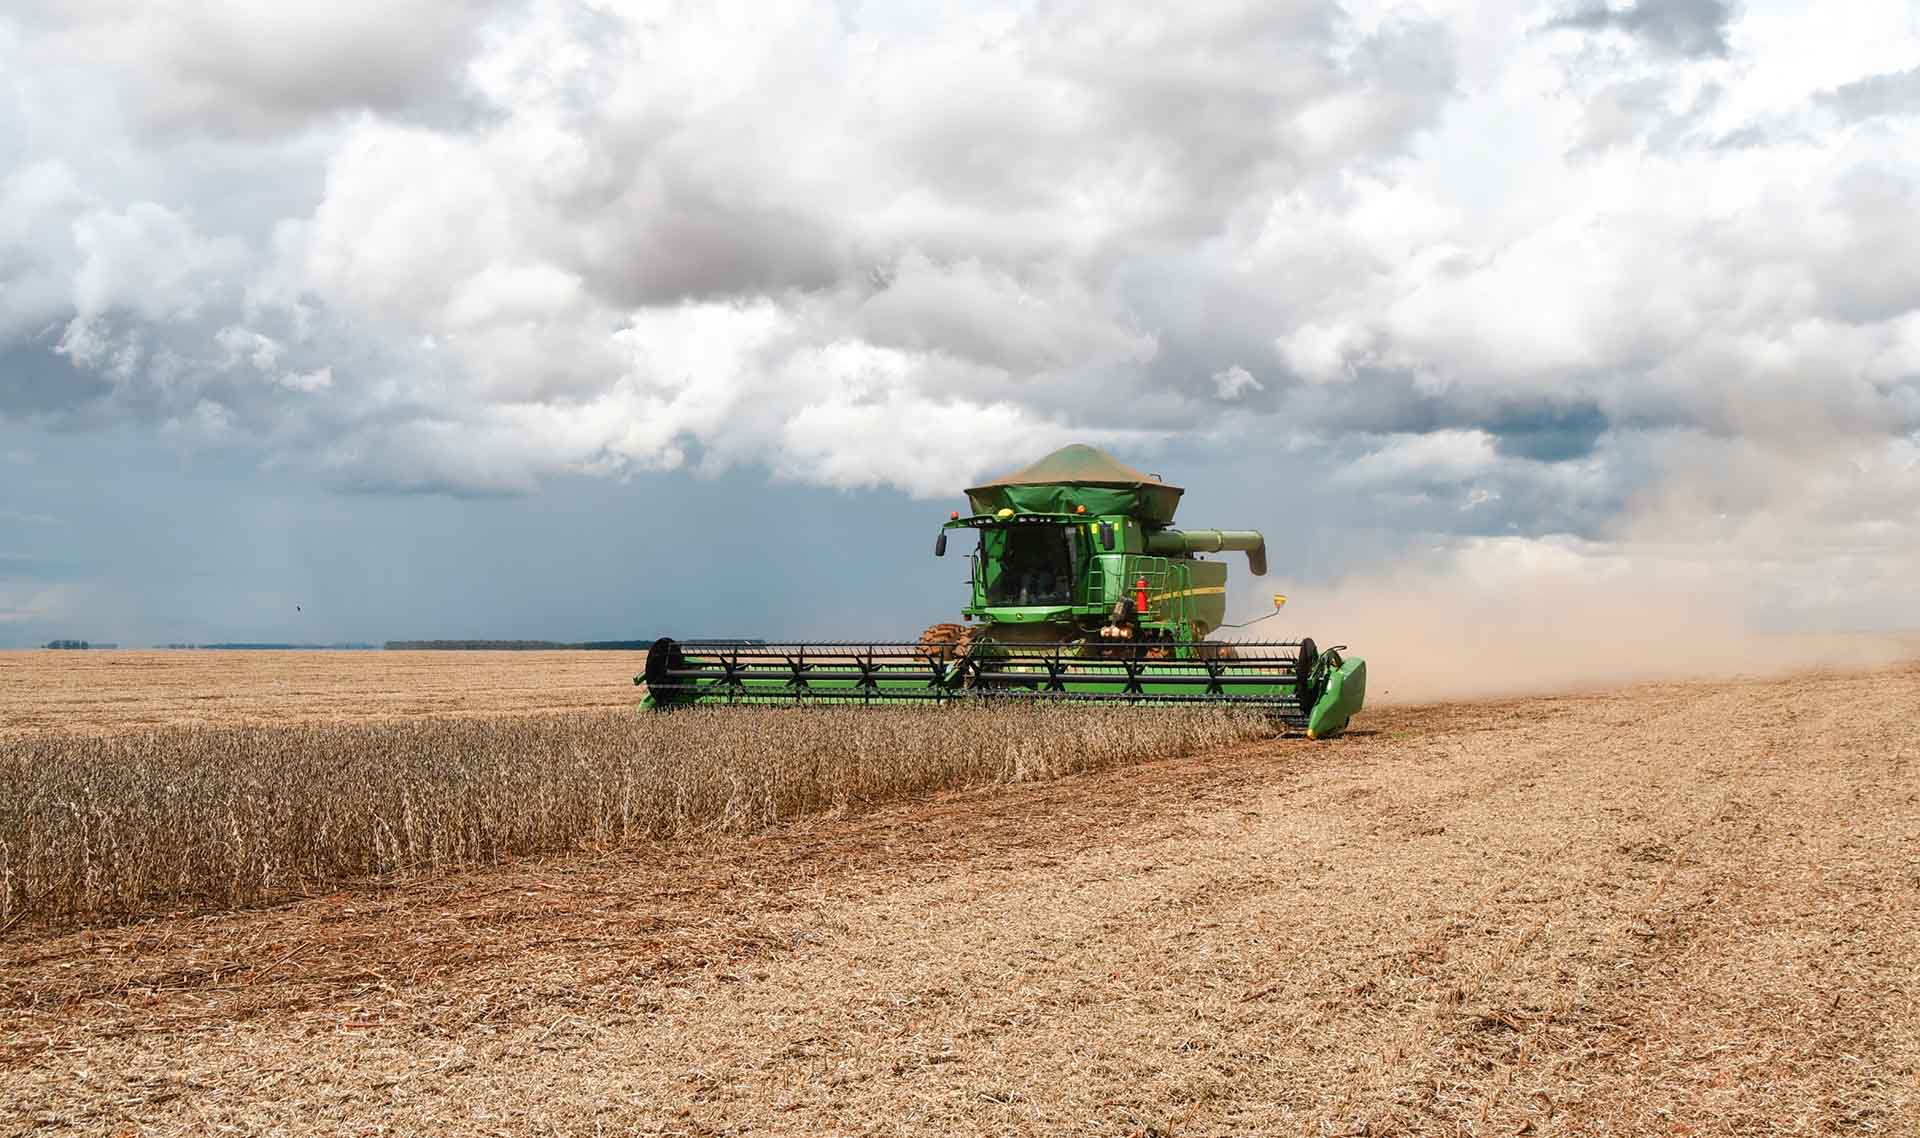 John Deere combine in Brazil harvesting soybeans